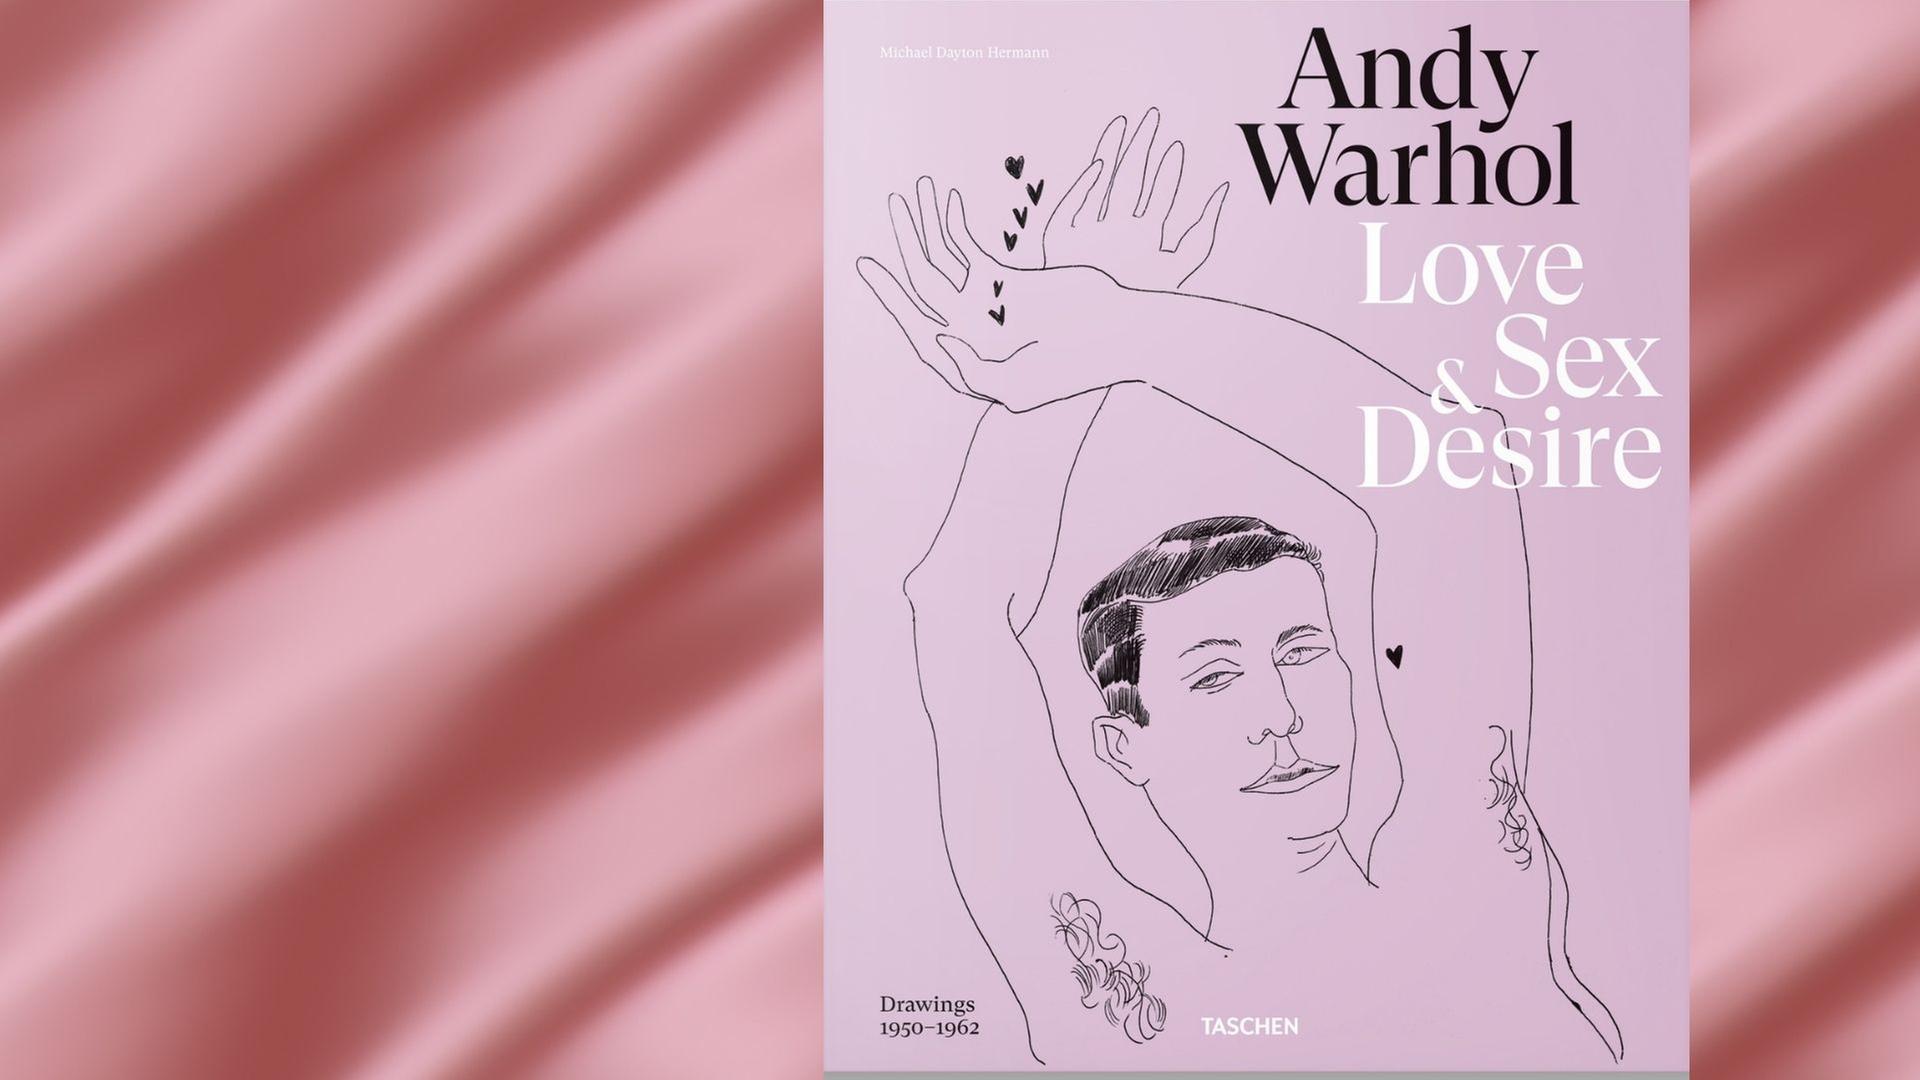 Buchcover: Drew Zeiba/Blake Gopnik/Michael Dayton Hermann (Hrsg.): „Andy Warhol. Love, Sex, and Desire. Drawings 1950–1962“